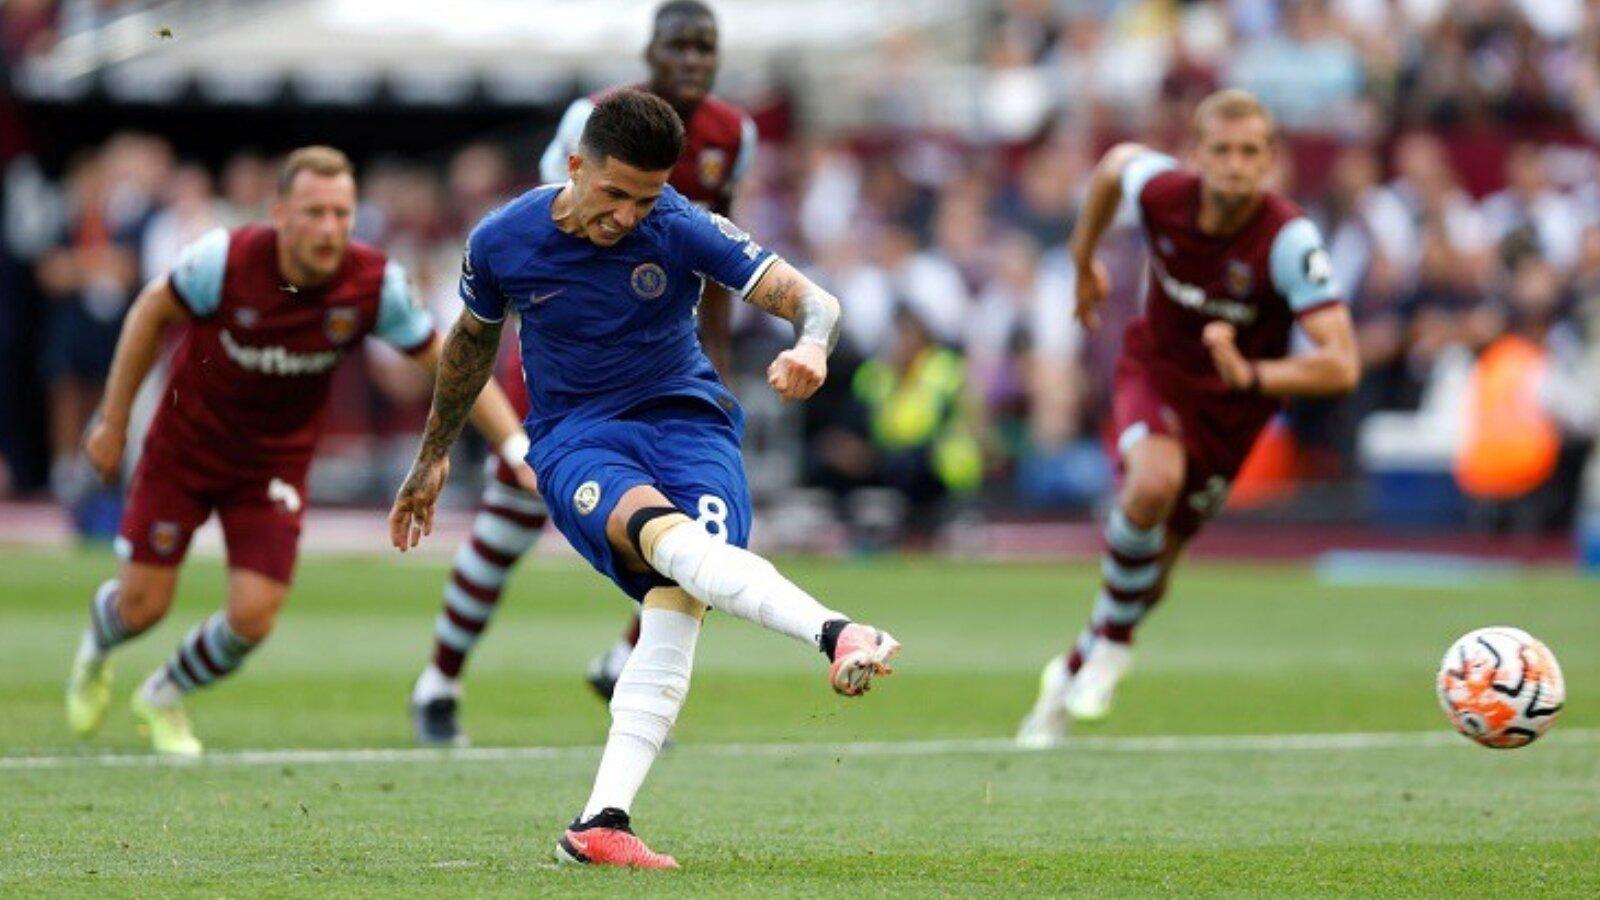 Enzo sút hỏng penalty cho Chelsea (nguồn ảnh: Internet)